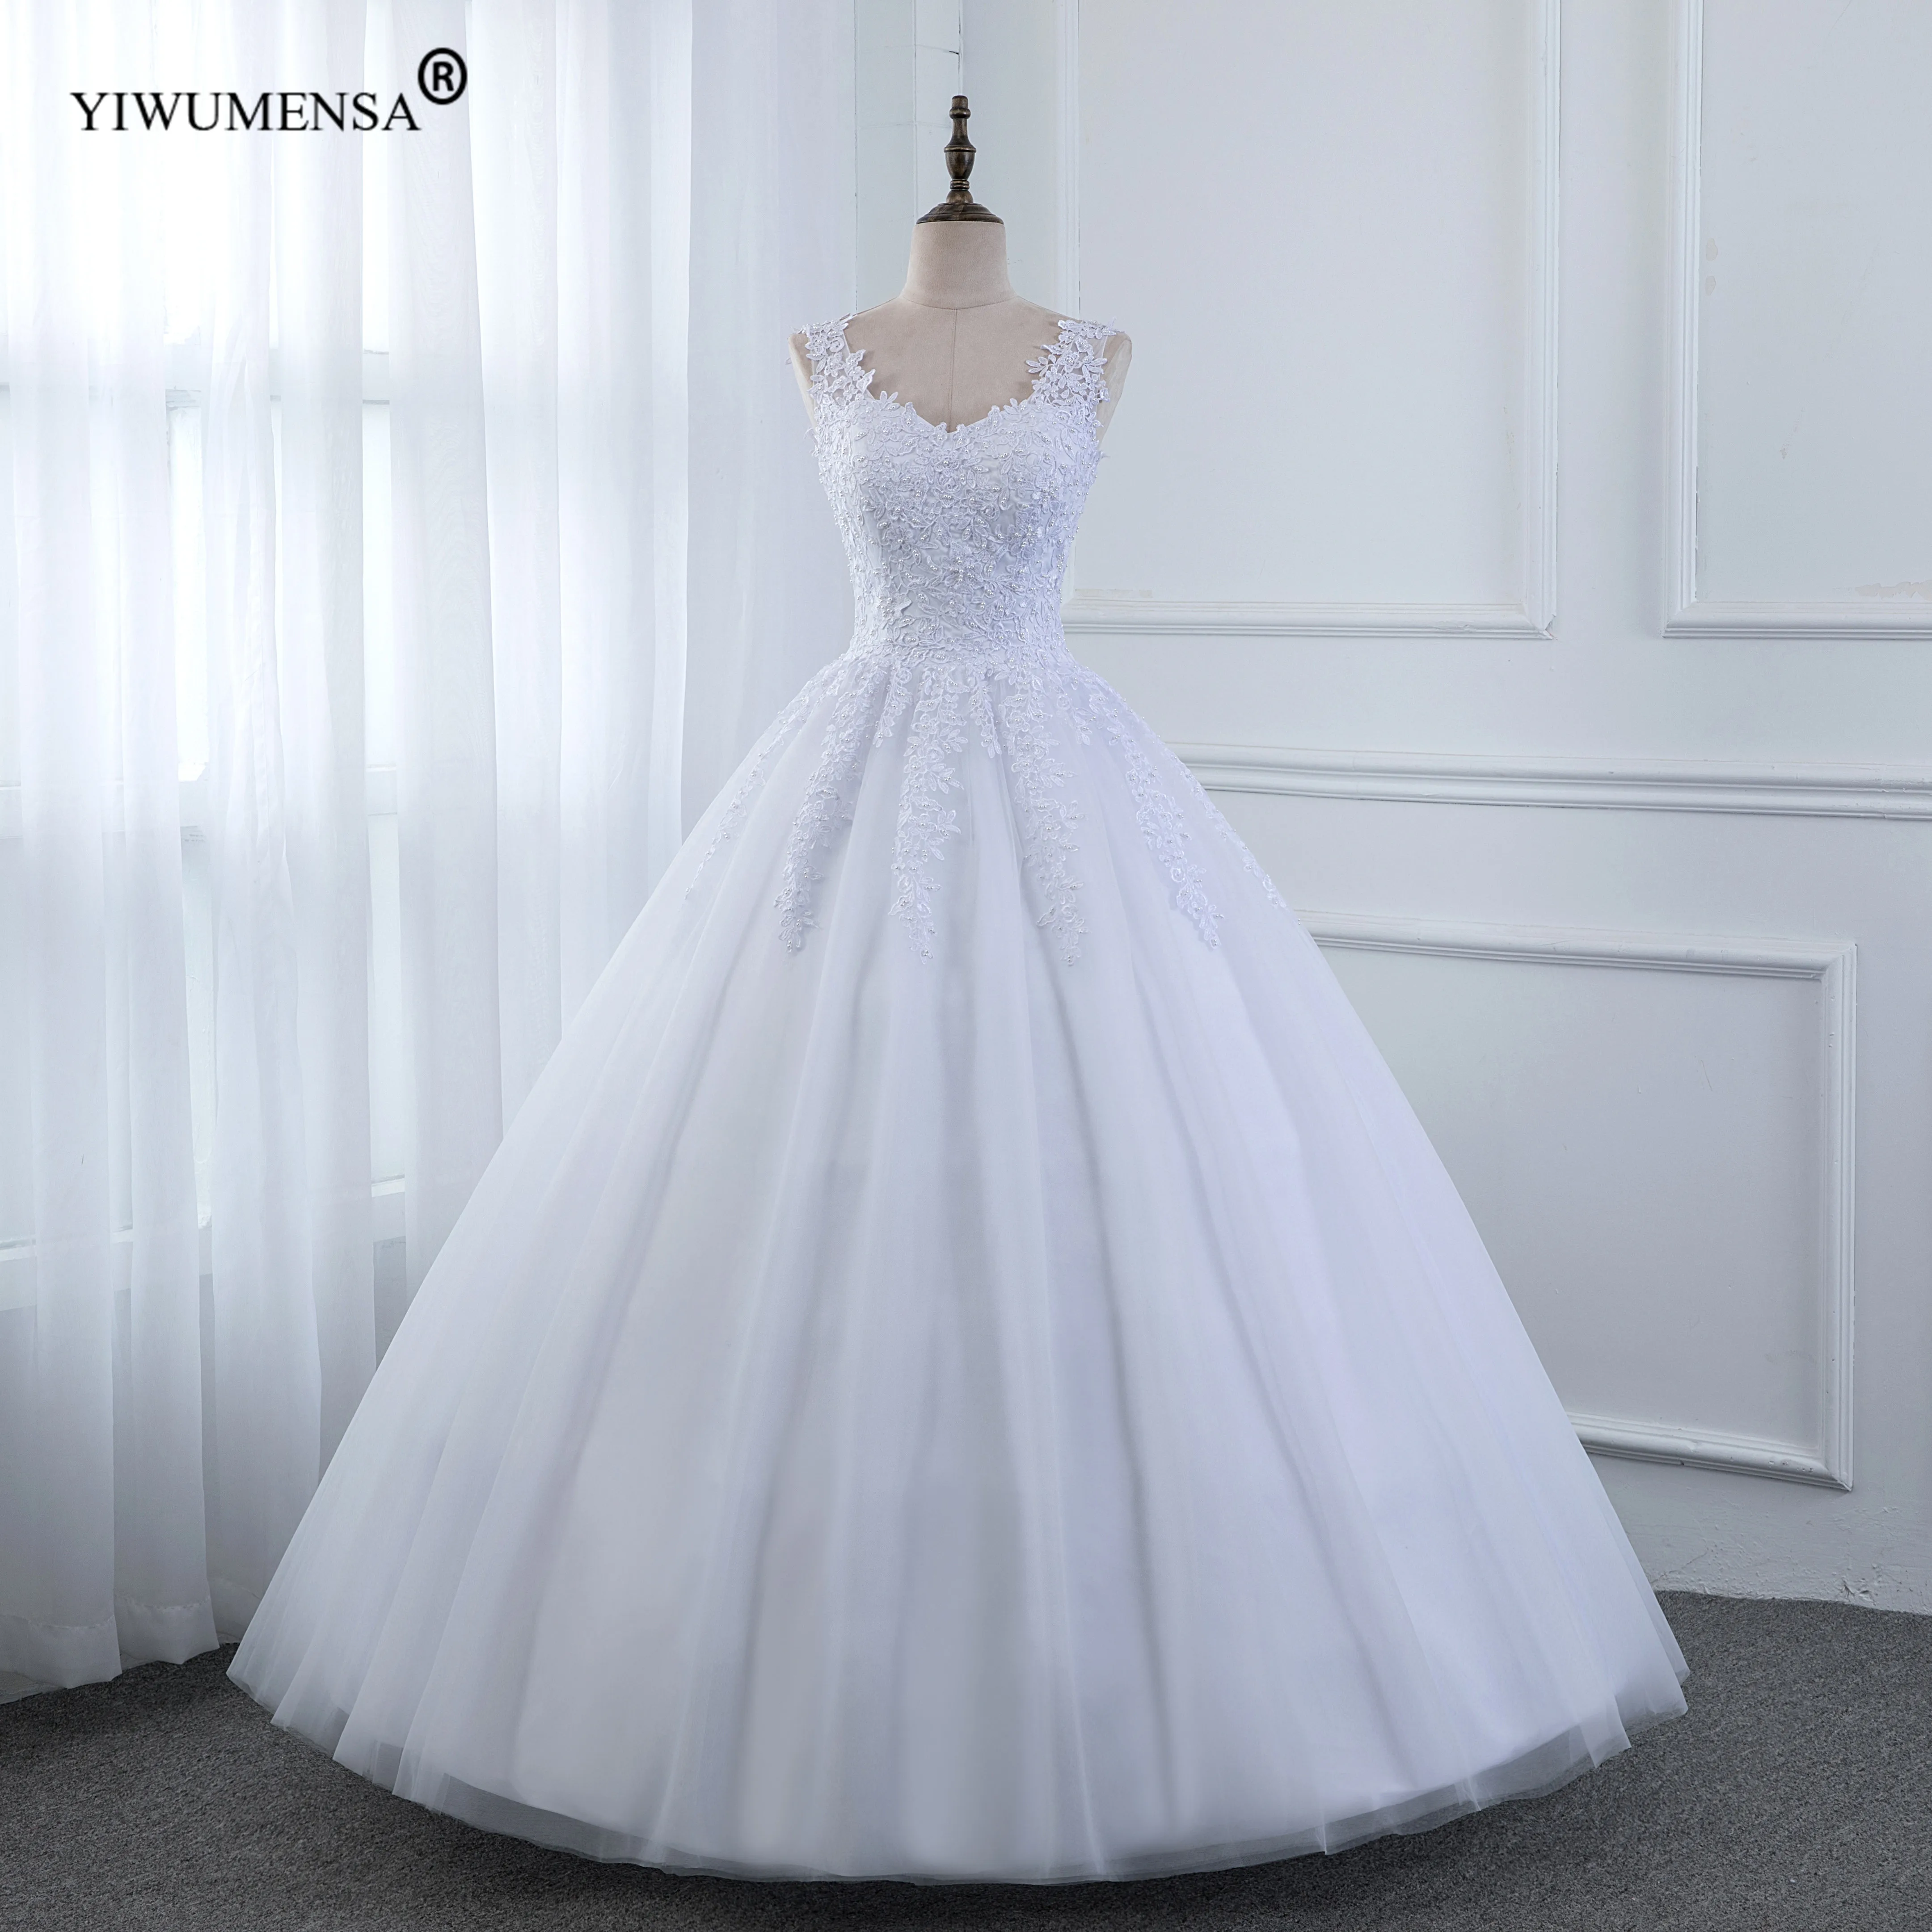 

A35 Ball Gown Floor Length Wedding Dress Cheap Pearls Lace Appliques Bridal Gowns Custom Made Plus Size Vestidos De Novias 2020